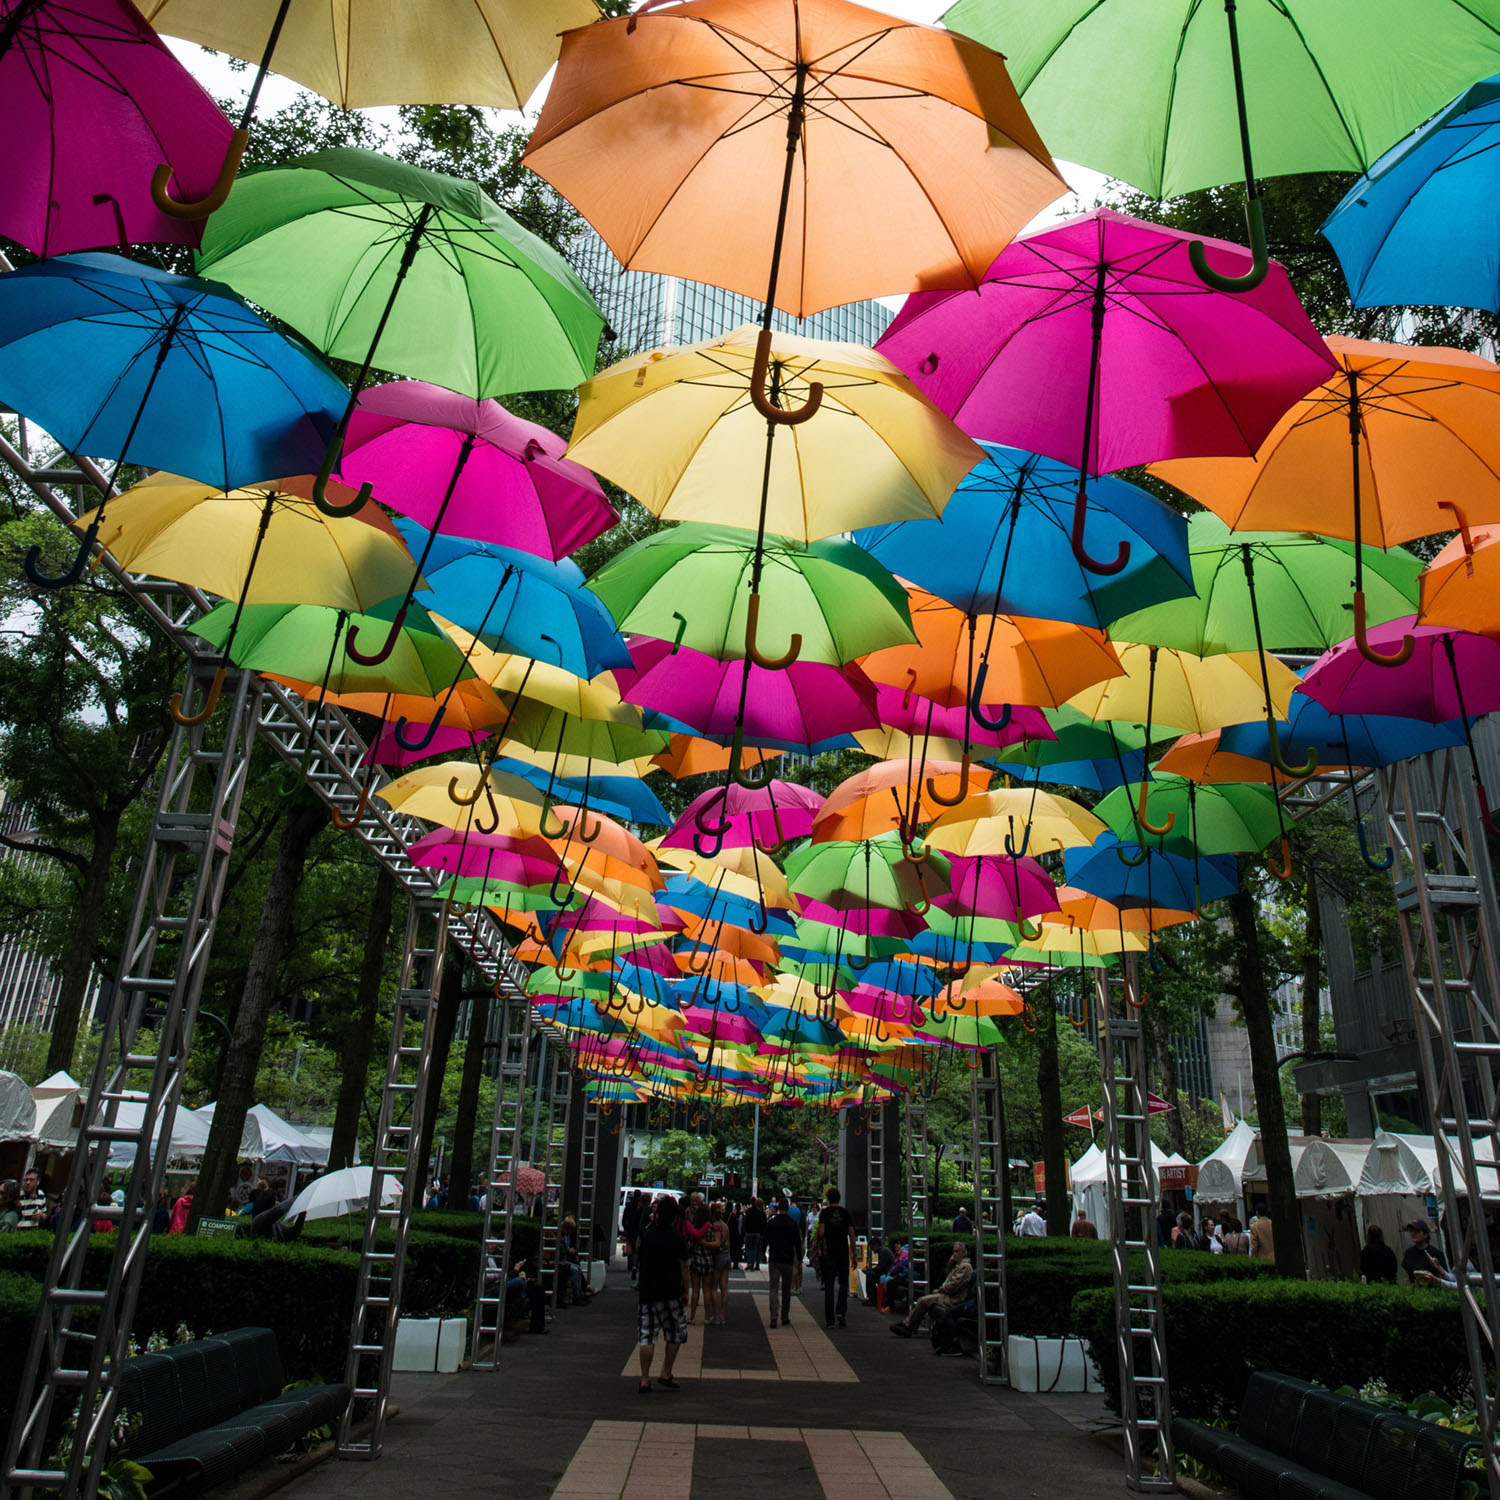 #Pittsburgh, #artsfestival, #streetart, #rain, #June, #umbrellas, #makelemonade